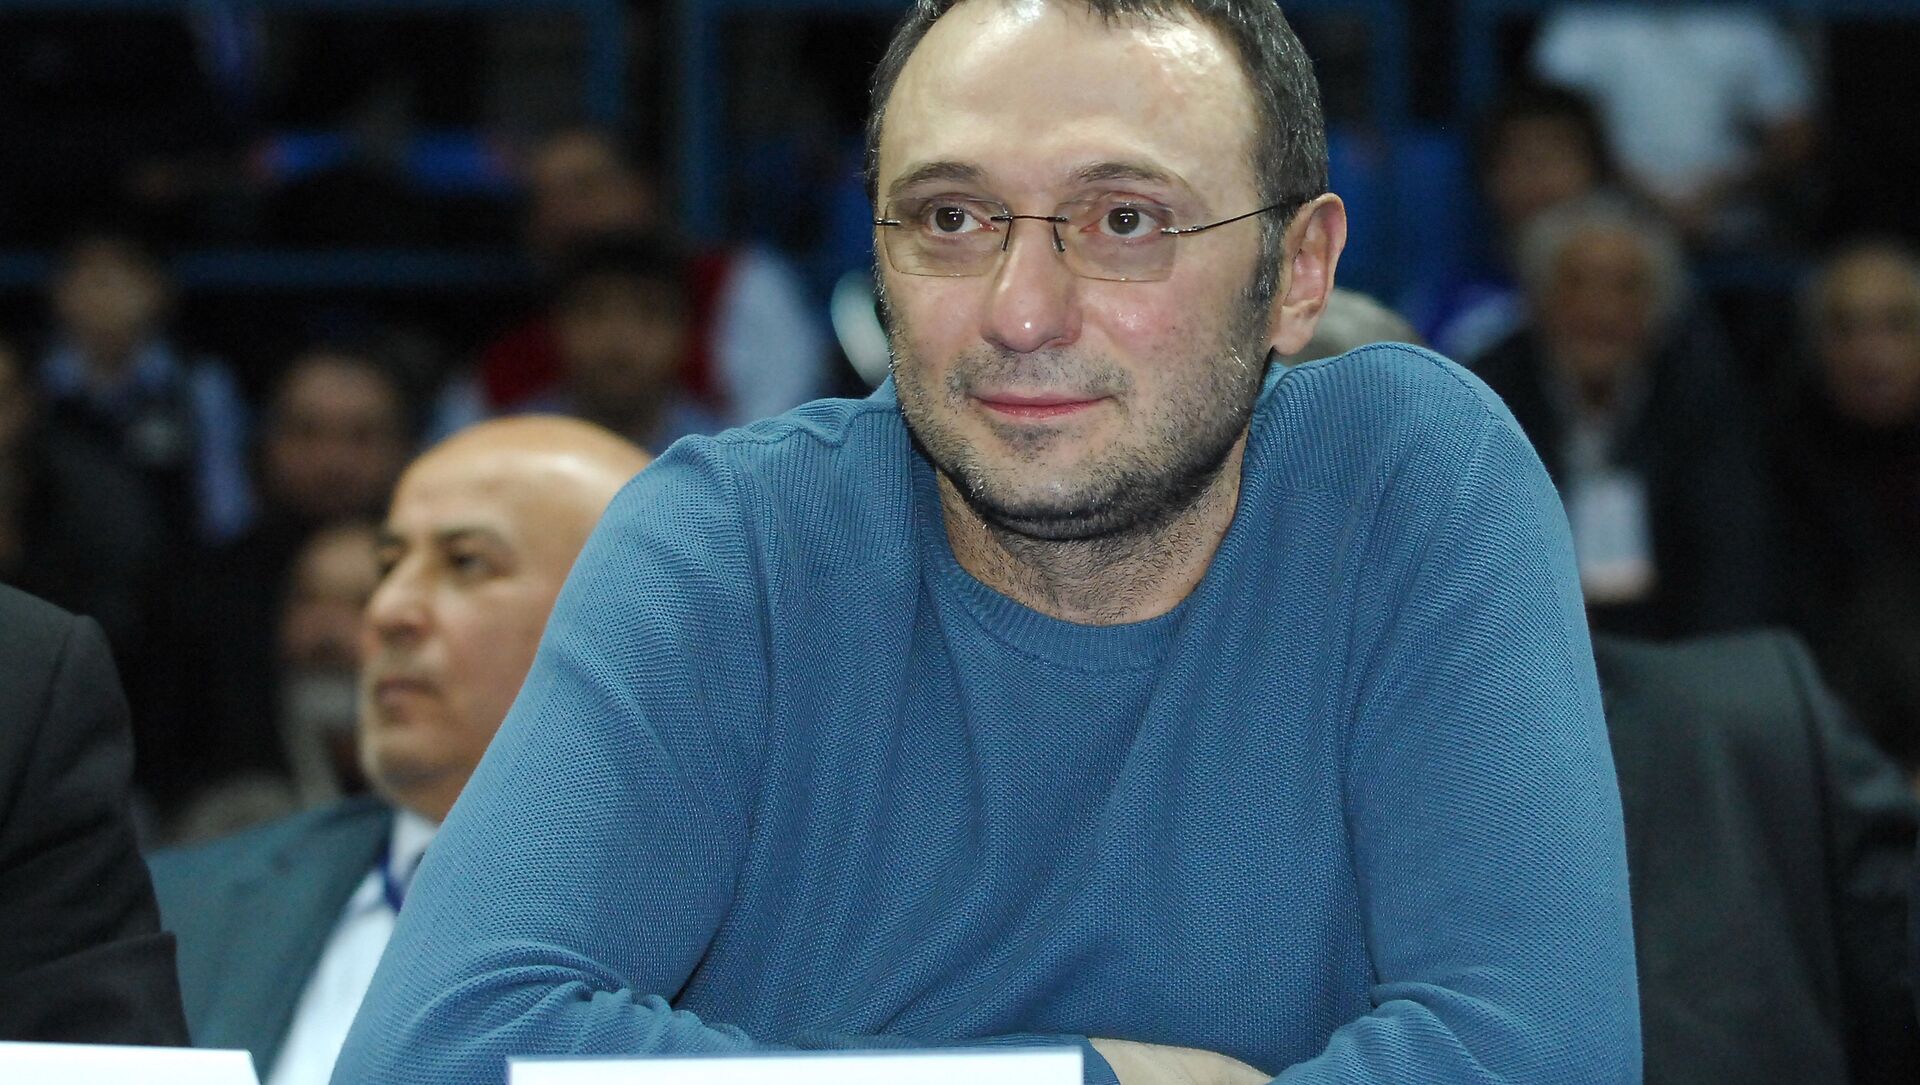 Suleiman Kerimov wearing a blue sweater